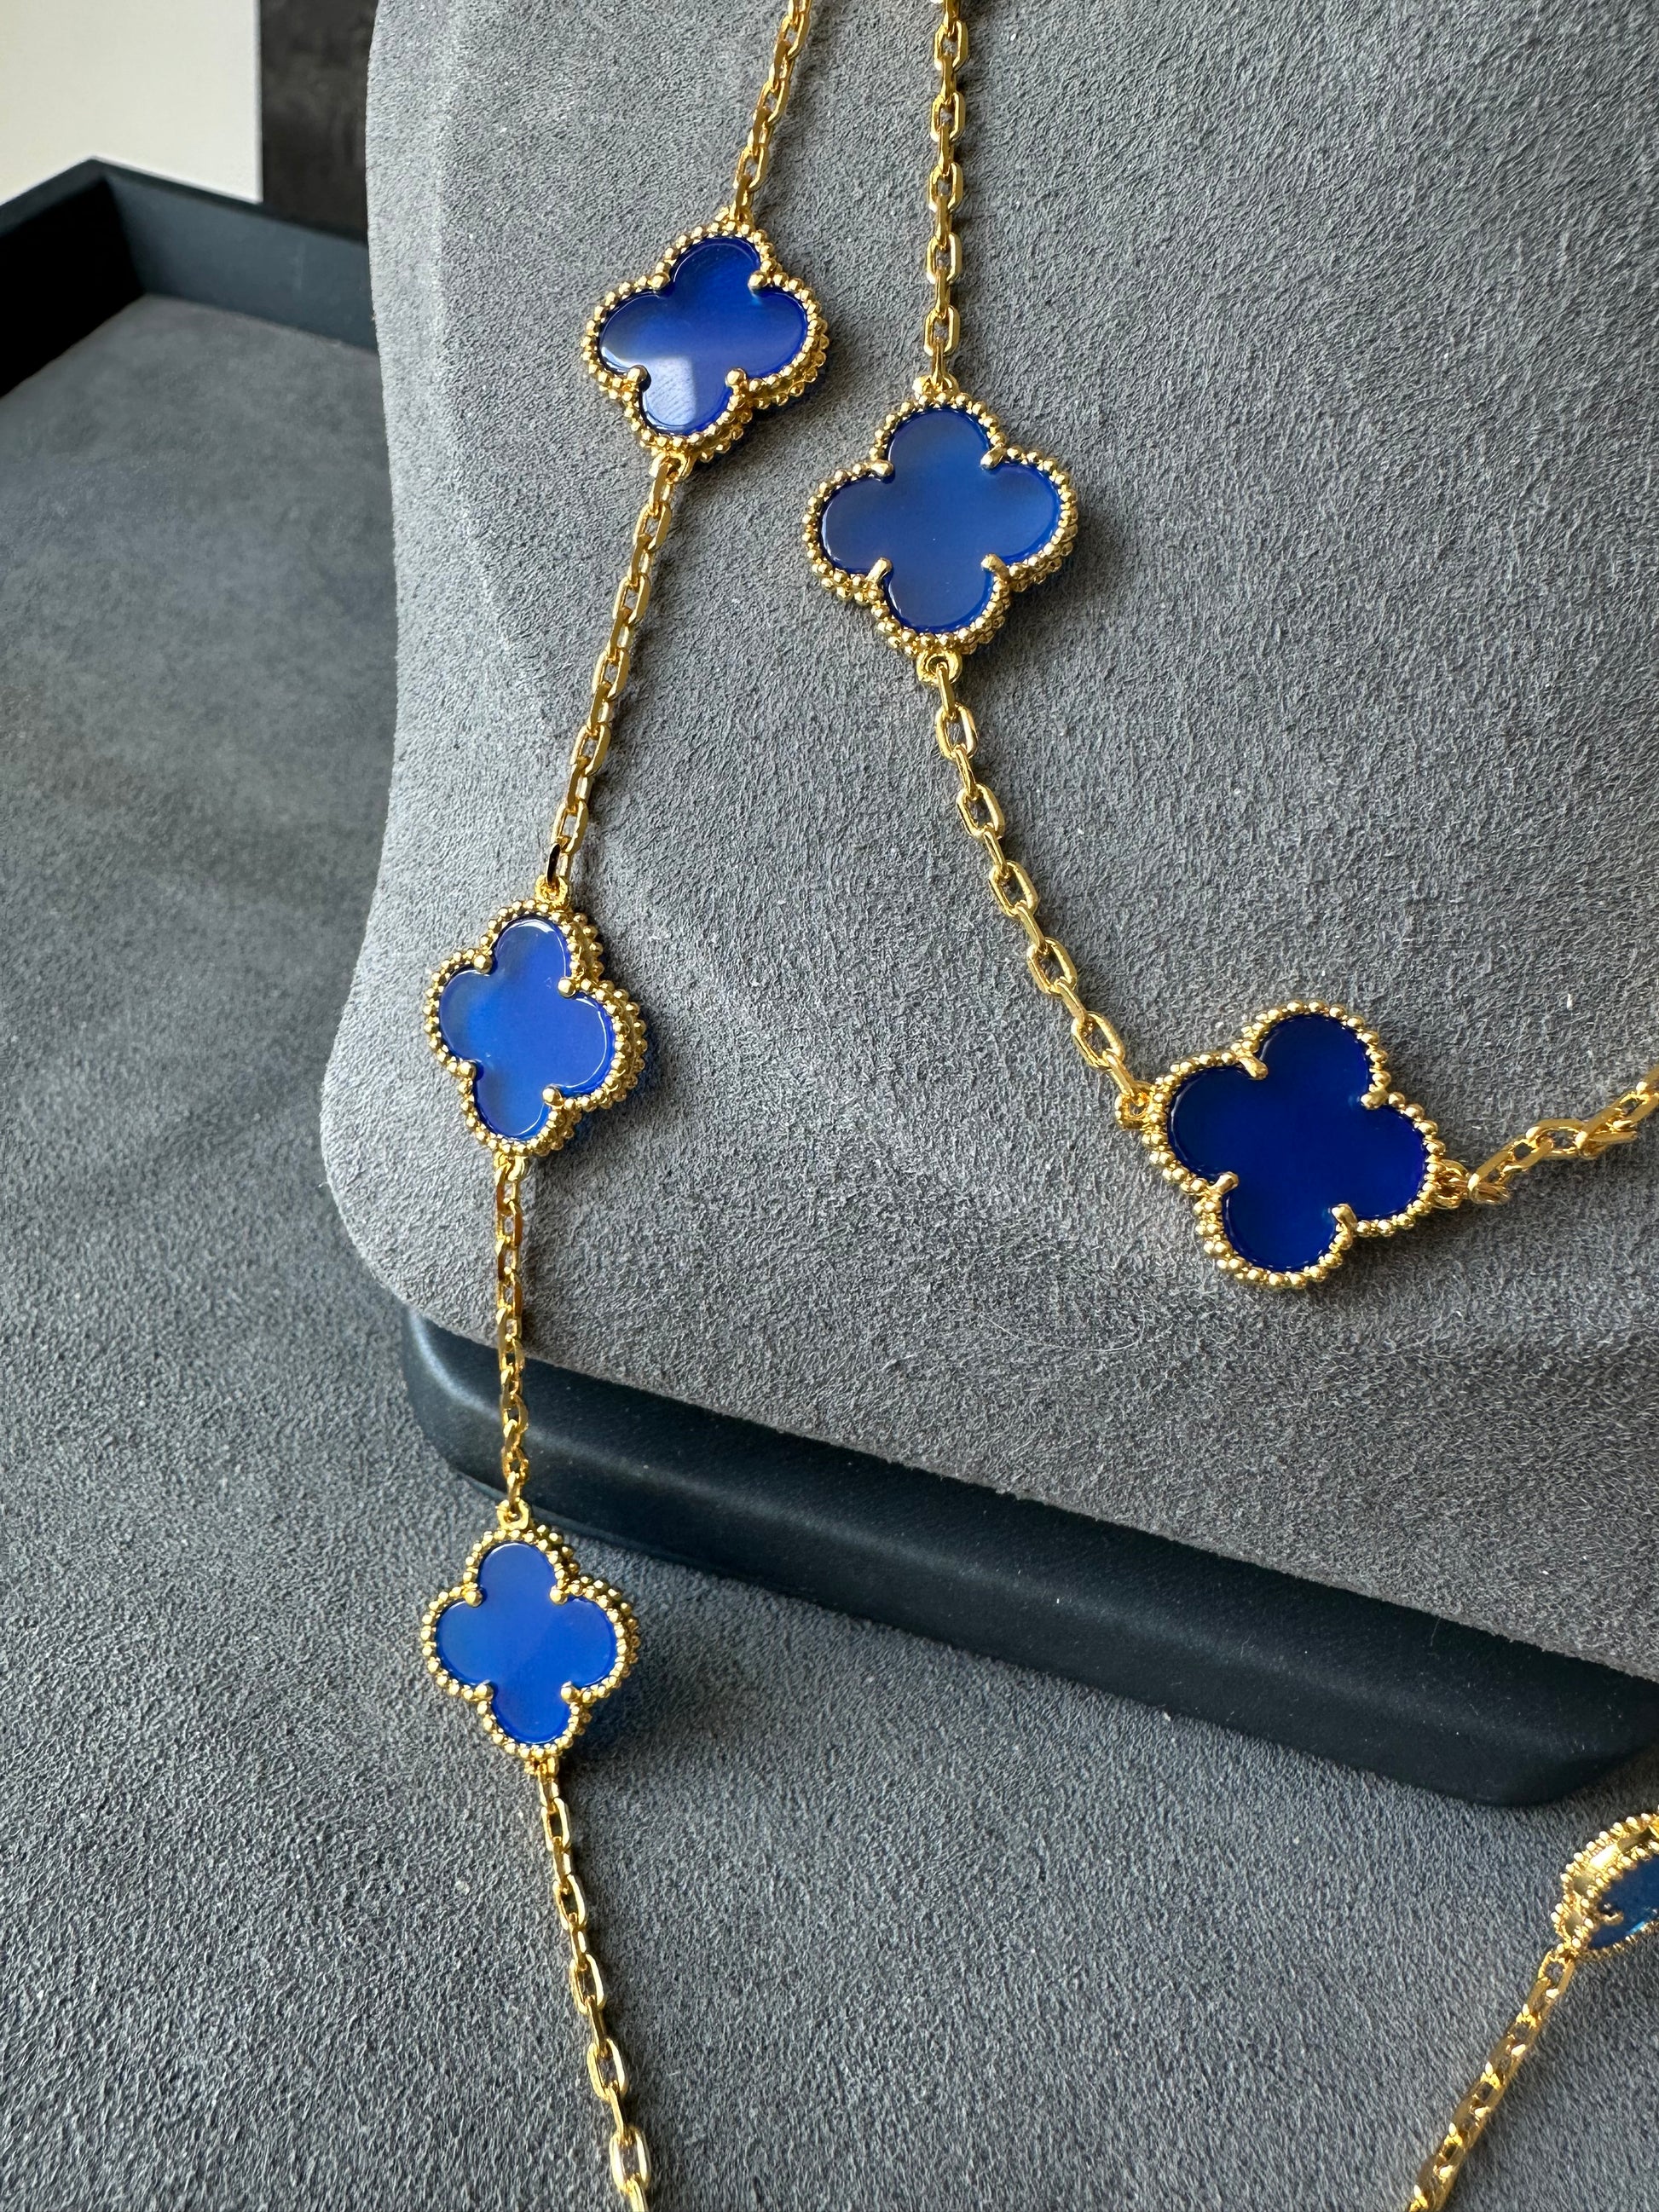 Blue agate 20 motif clover necklace 925 silver 18k gold plated 84 cm long clover size 15mm - ParadiseKissCo